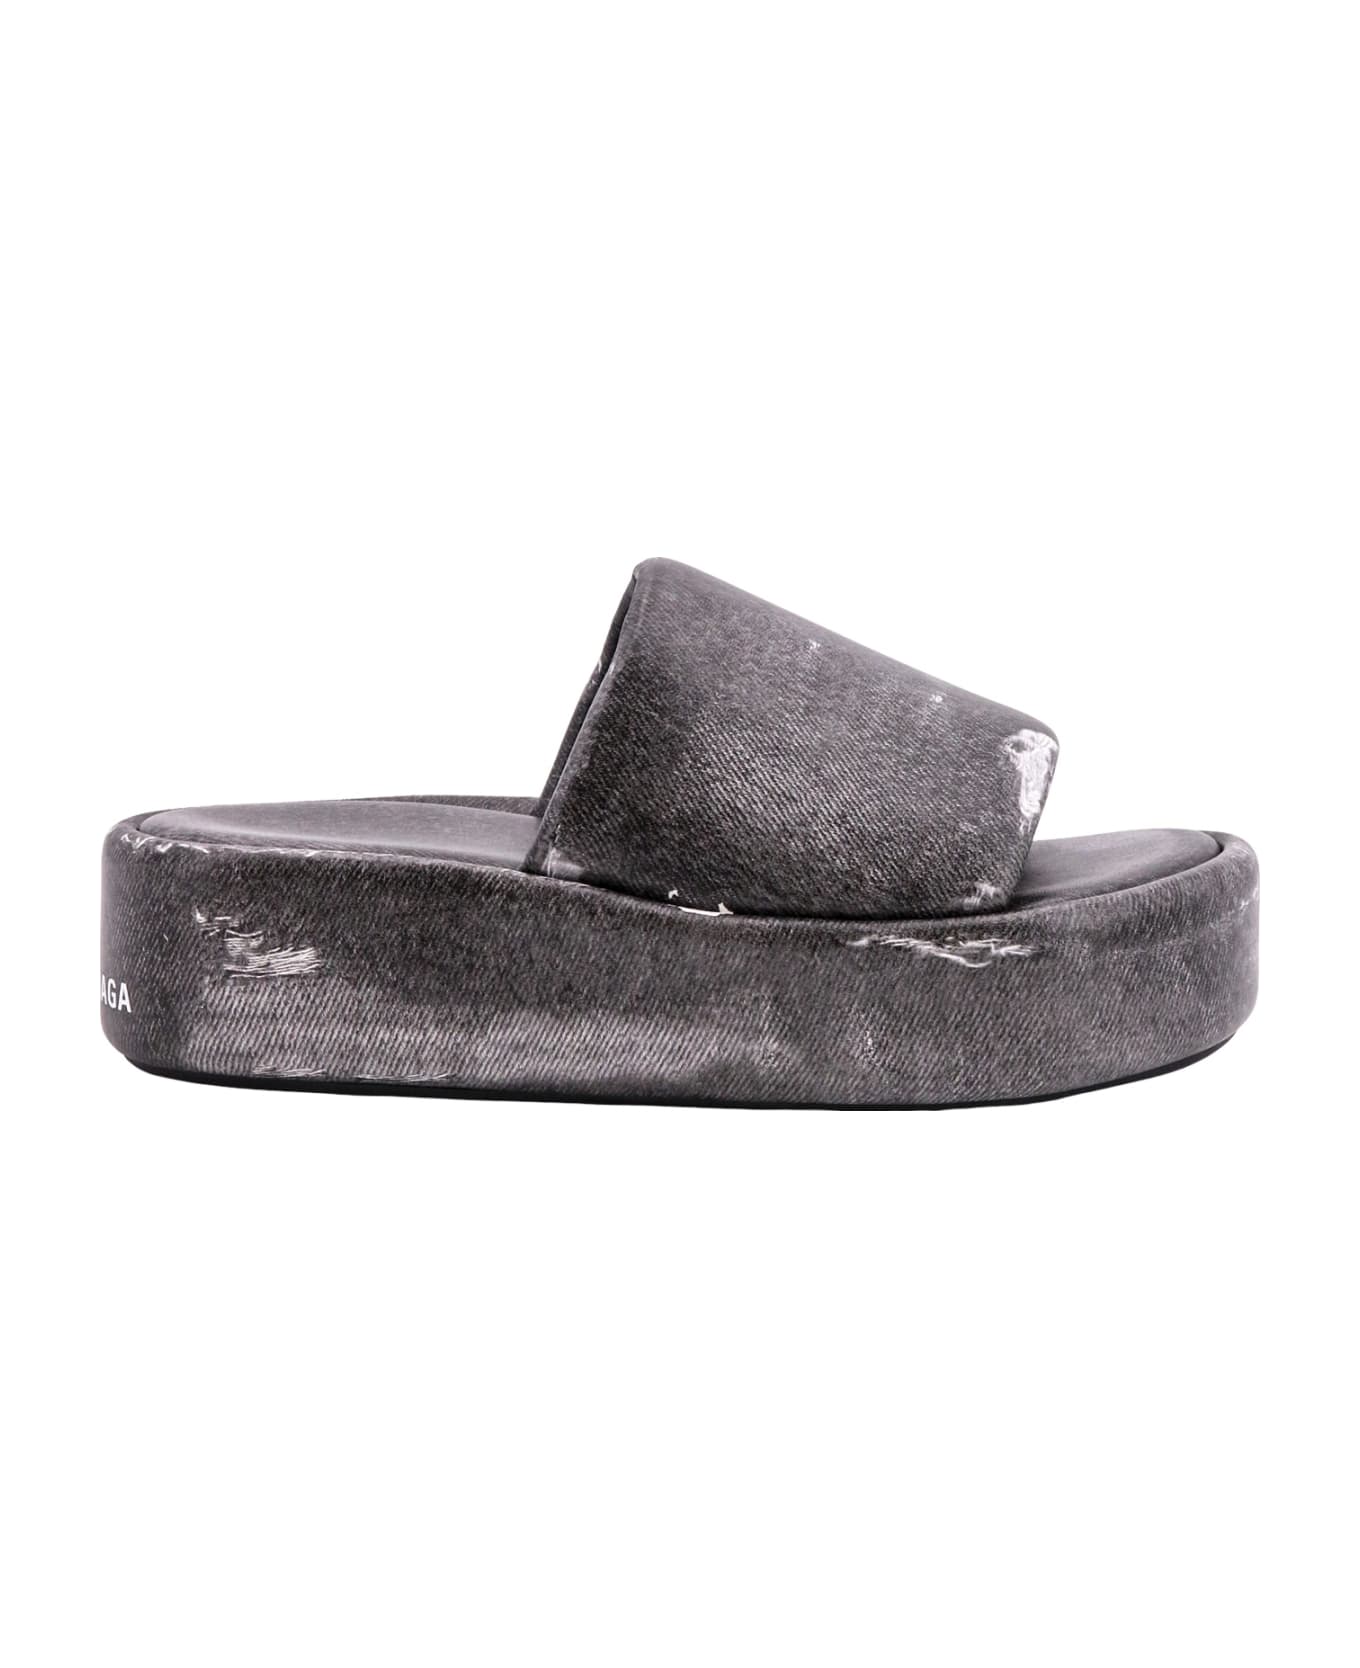 Balenciaga Slide Sandals - Black